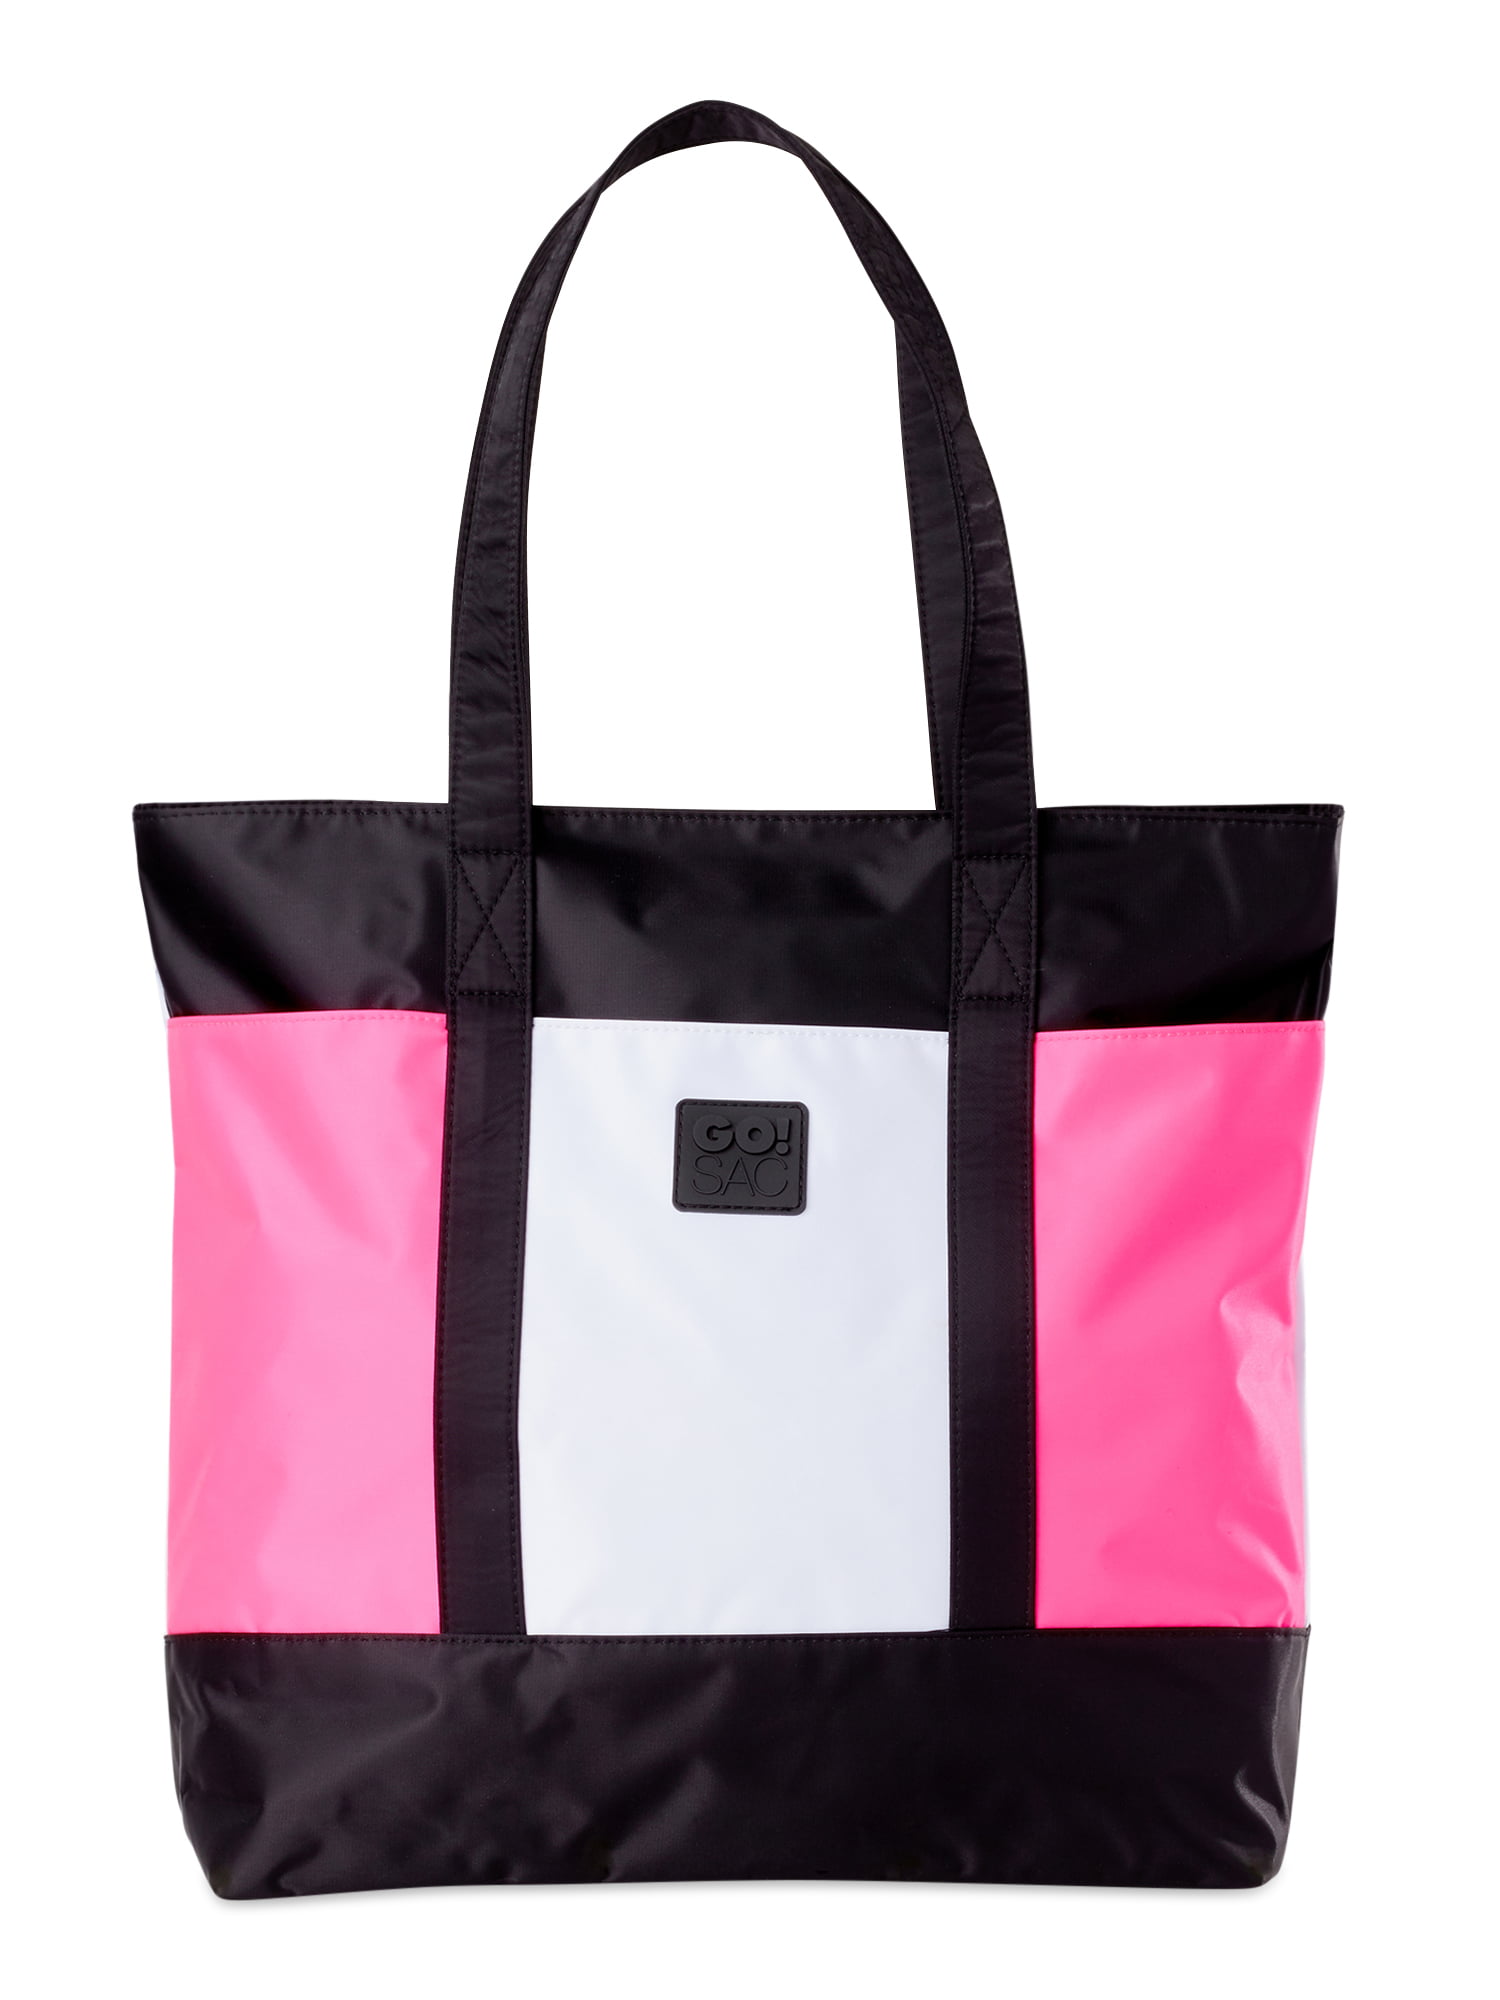 Drops Neon Colorful Tote Bag Purse Handbag For Women Girls